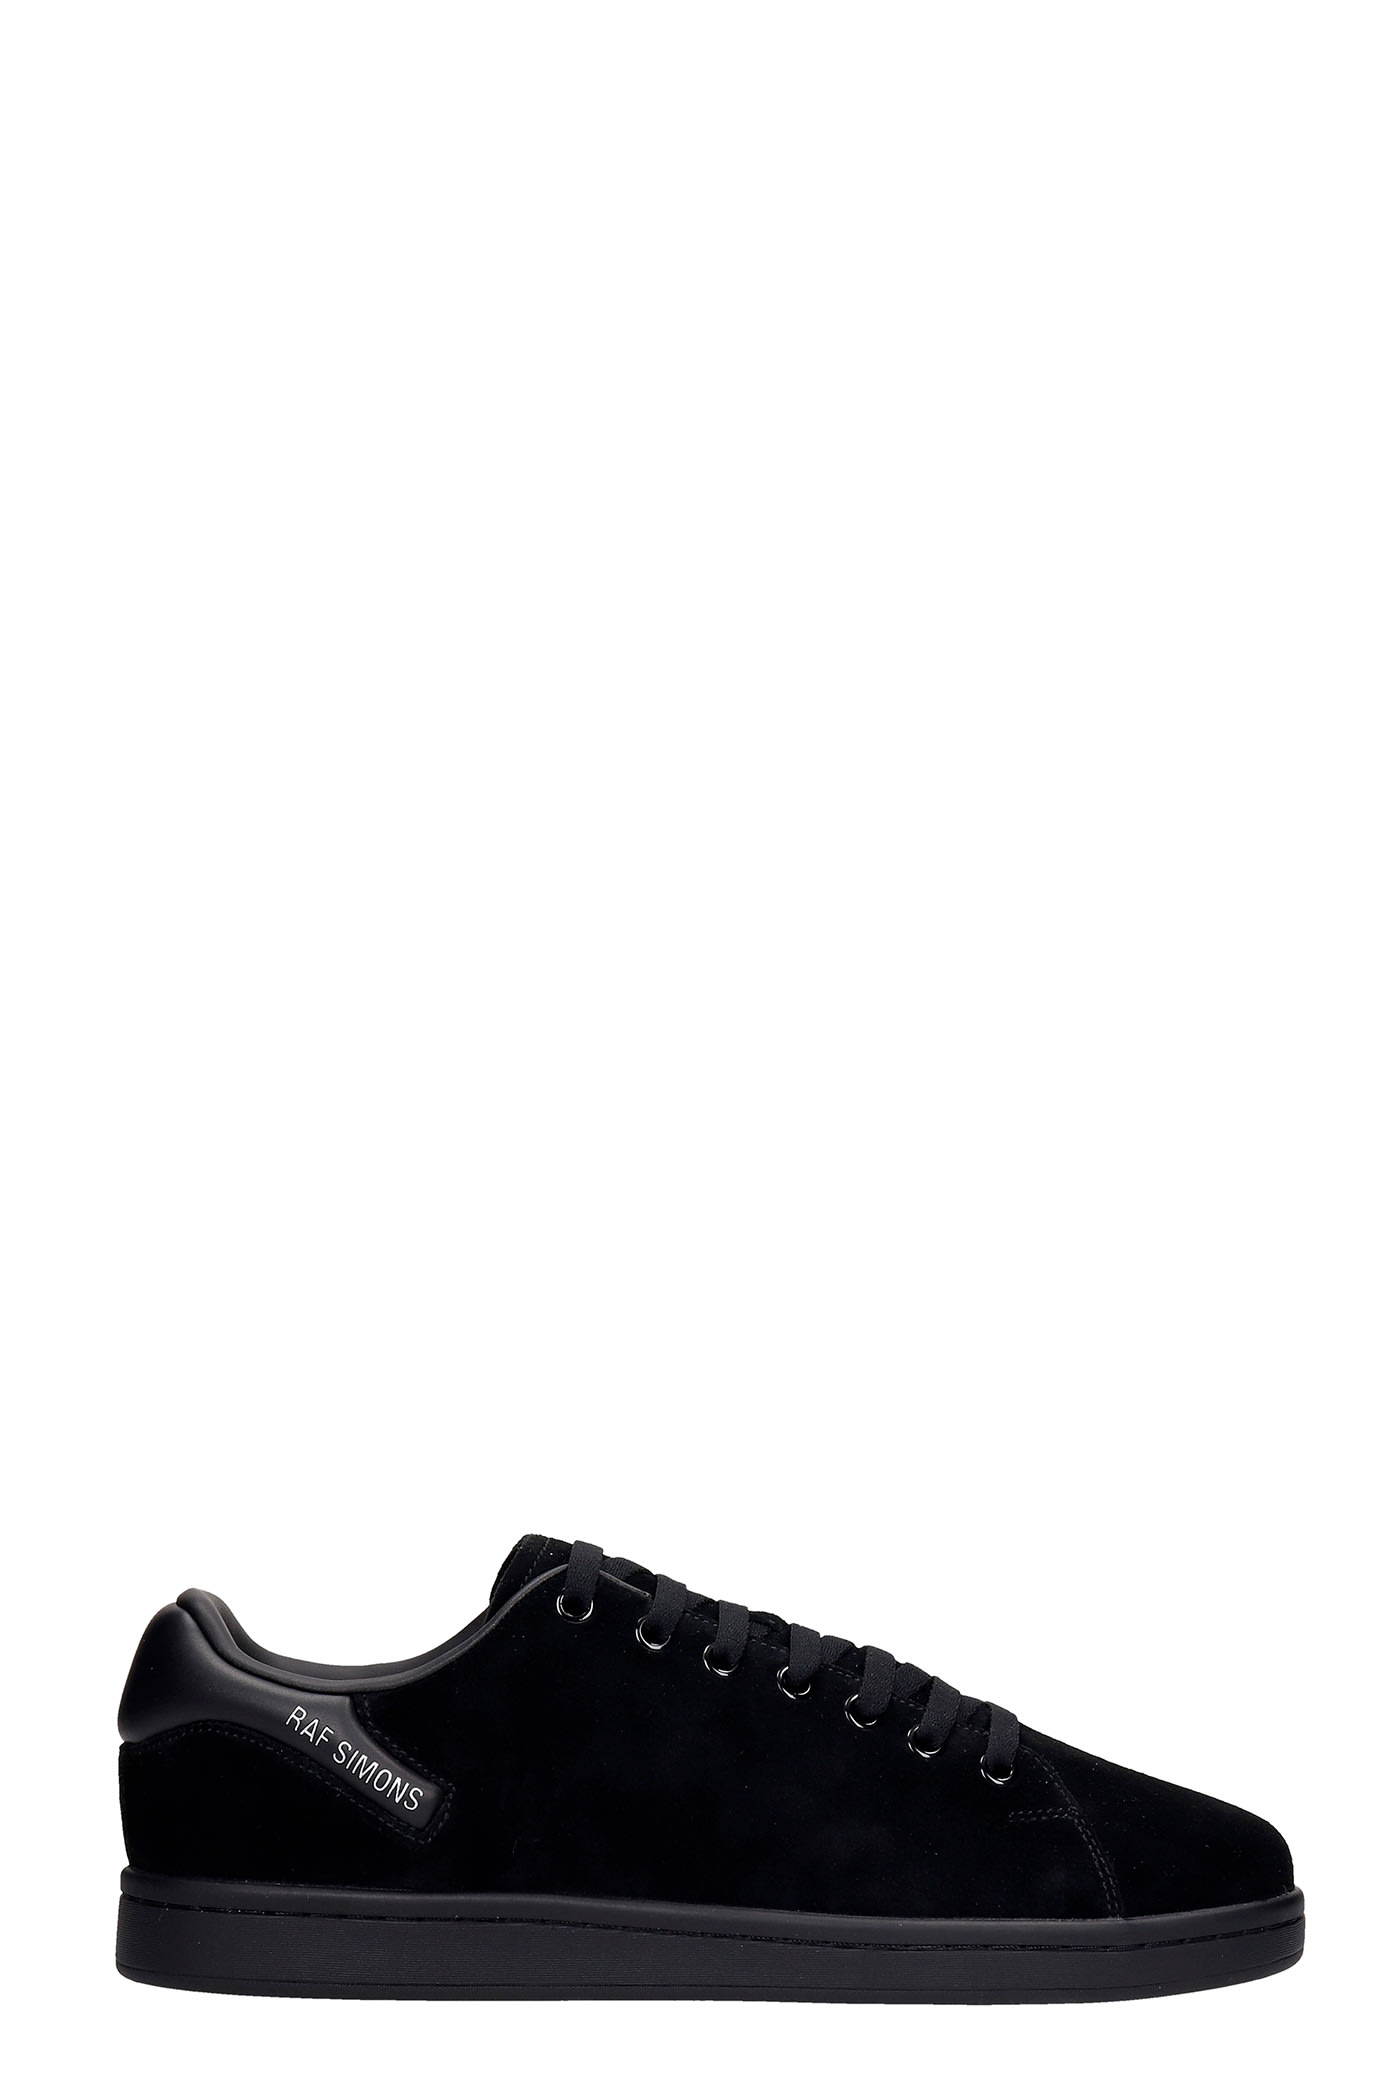 Raf Simons Orion Sneakers In Black Suede